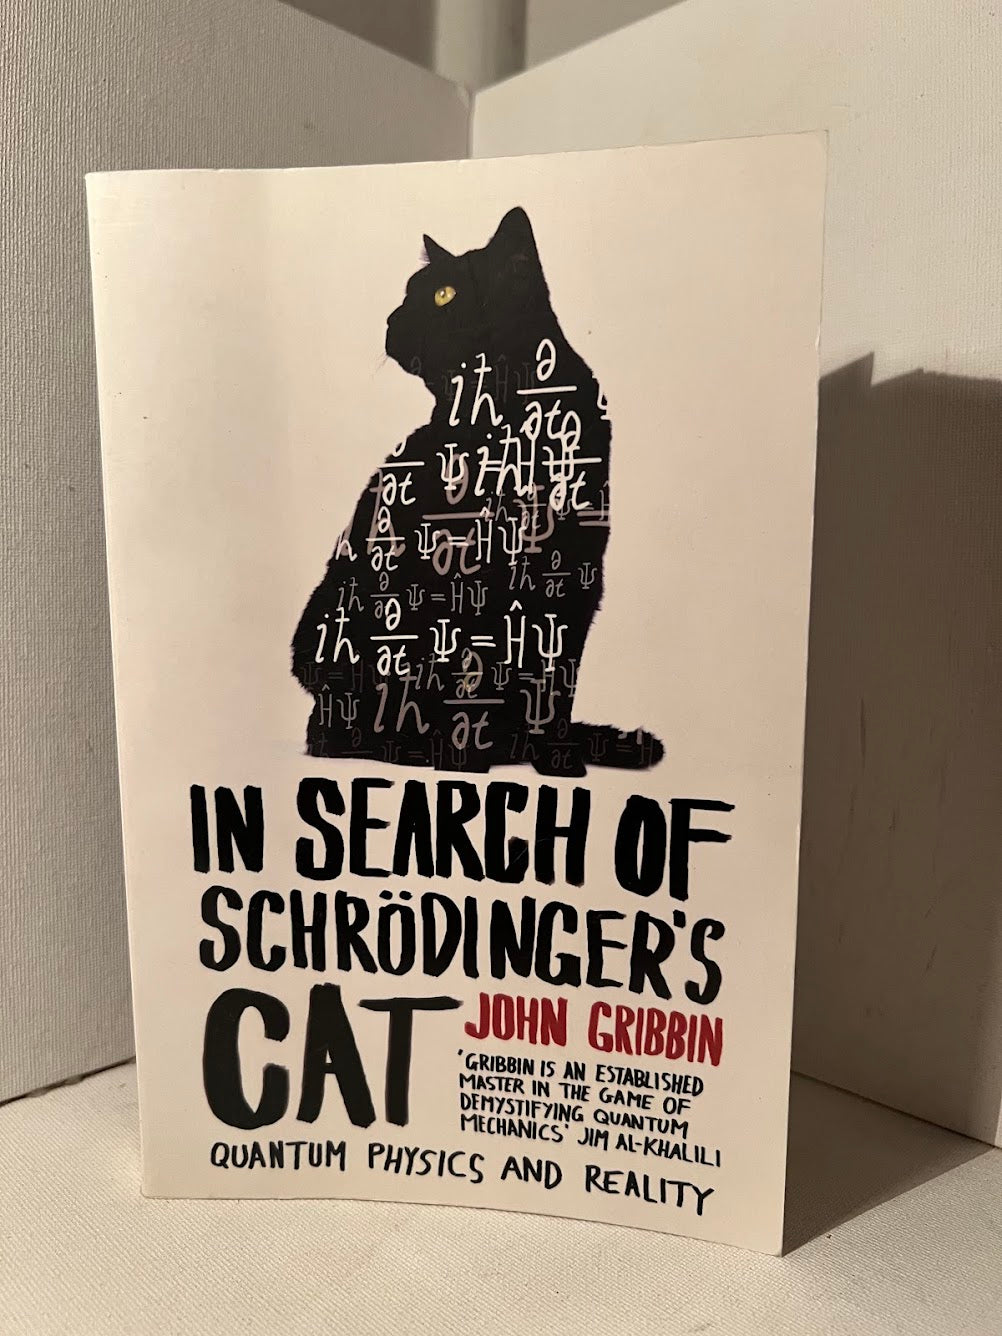 In Search of Schrodinger's Cat by John Gribbin